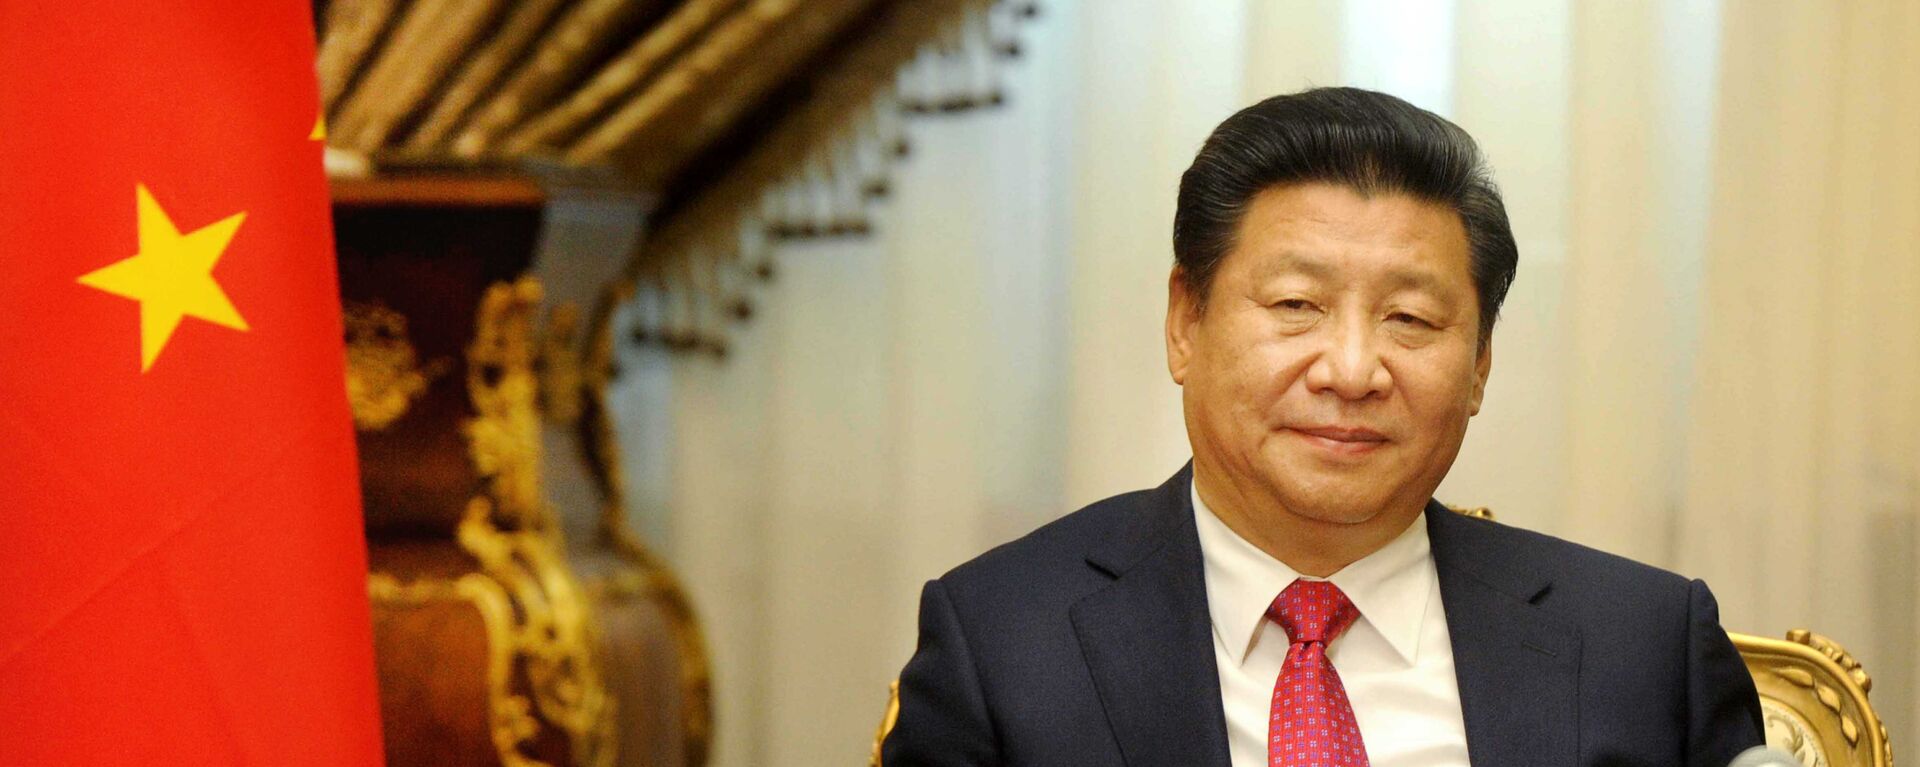 Chinese President Xi Jinping visits the parliament in Cairo, Egypt, Thursday, Jan. 21, 2016. - Sputnik Mundo, 1920, 18.09.2021